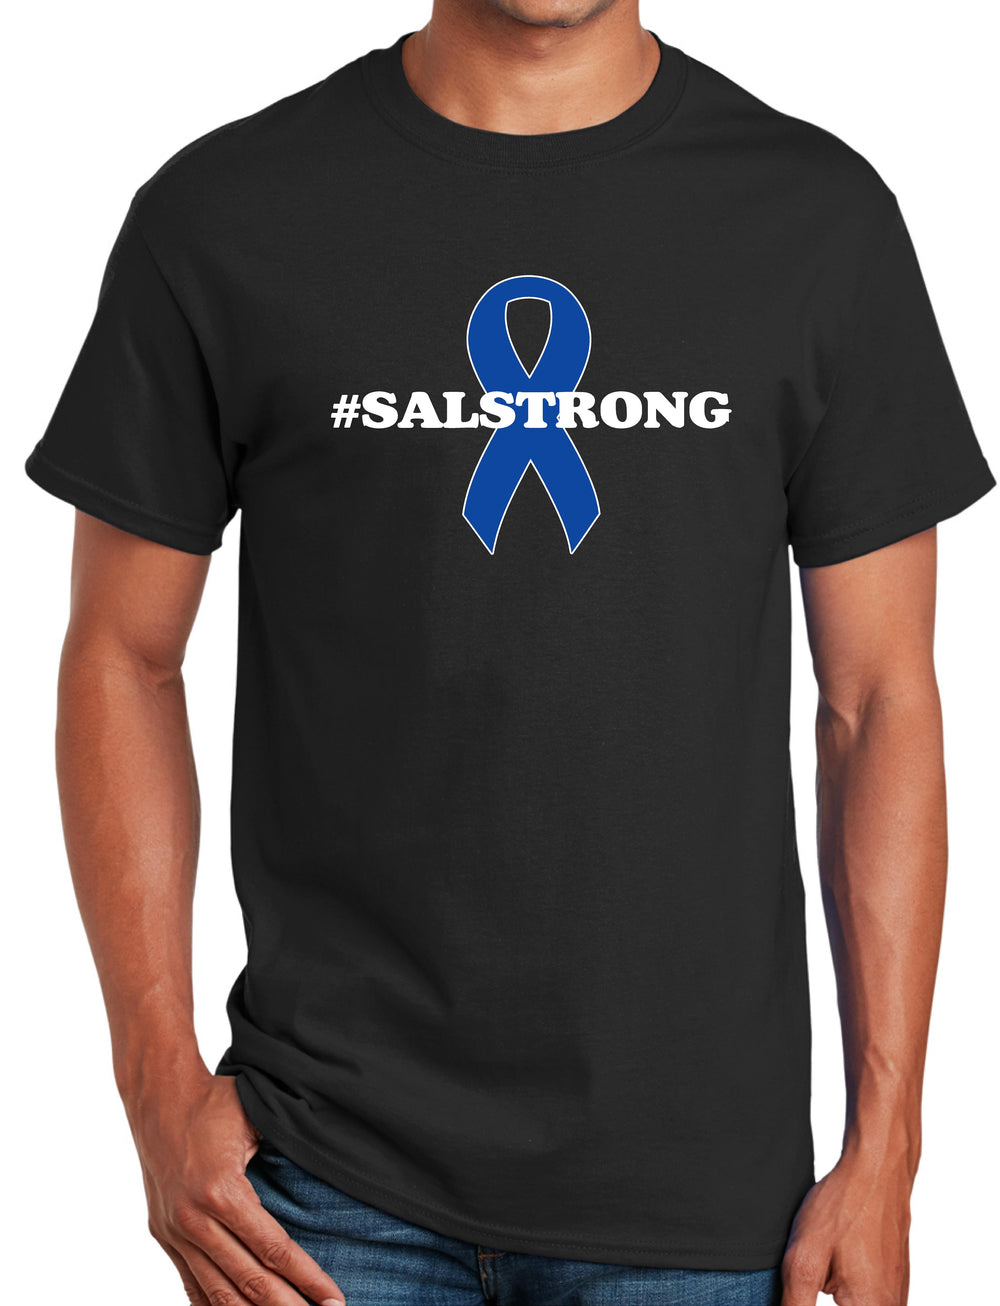 #SALSTRONG Fundraiser shirt Black shirt Sm-5XL- Profits donated to family